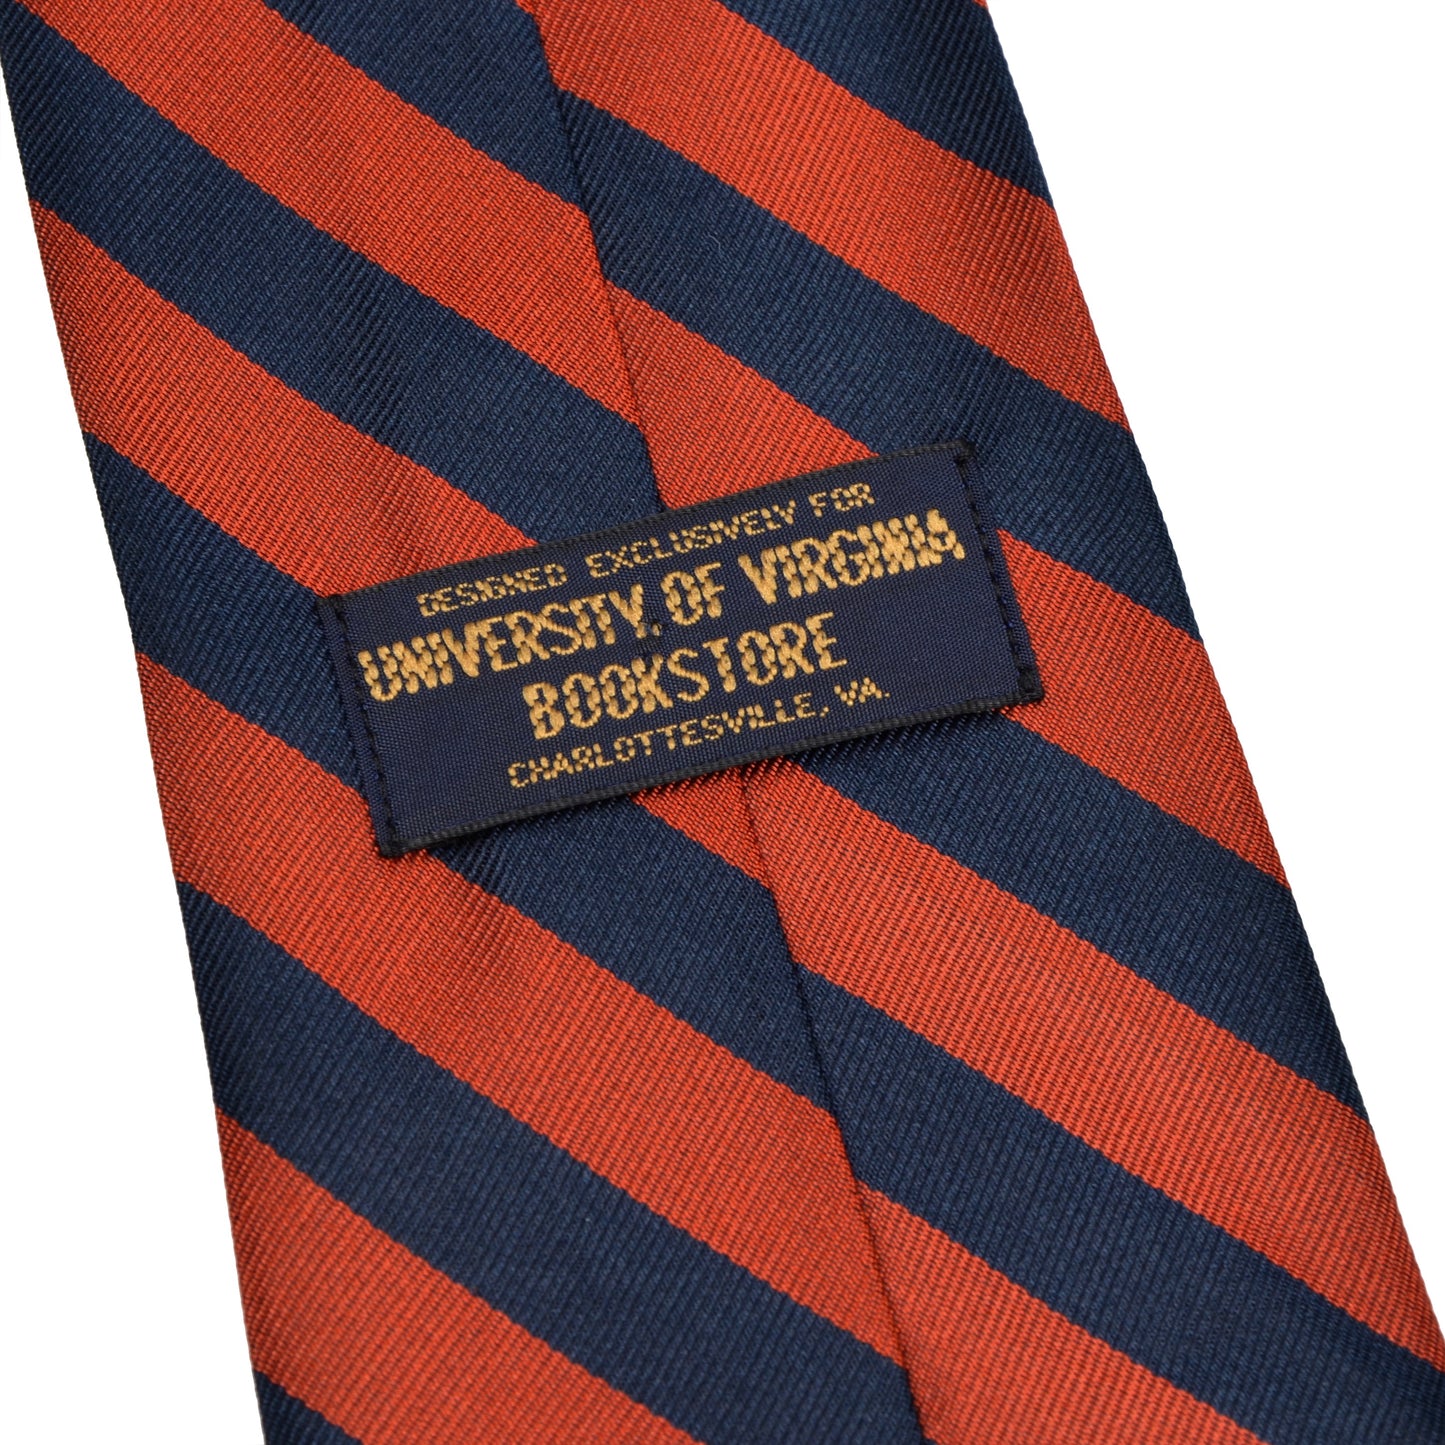 Brooks Brothers University of Virginia Silk Tie - Orange & Blue